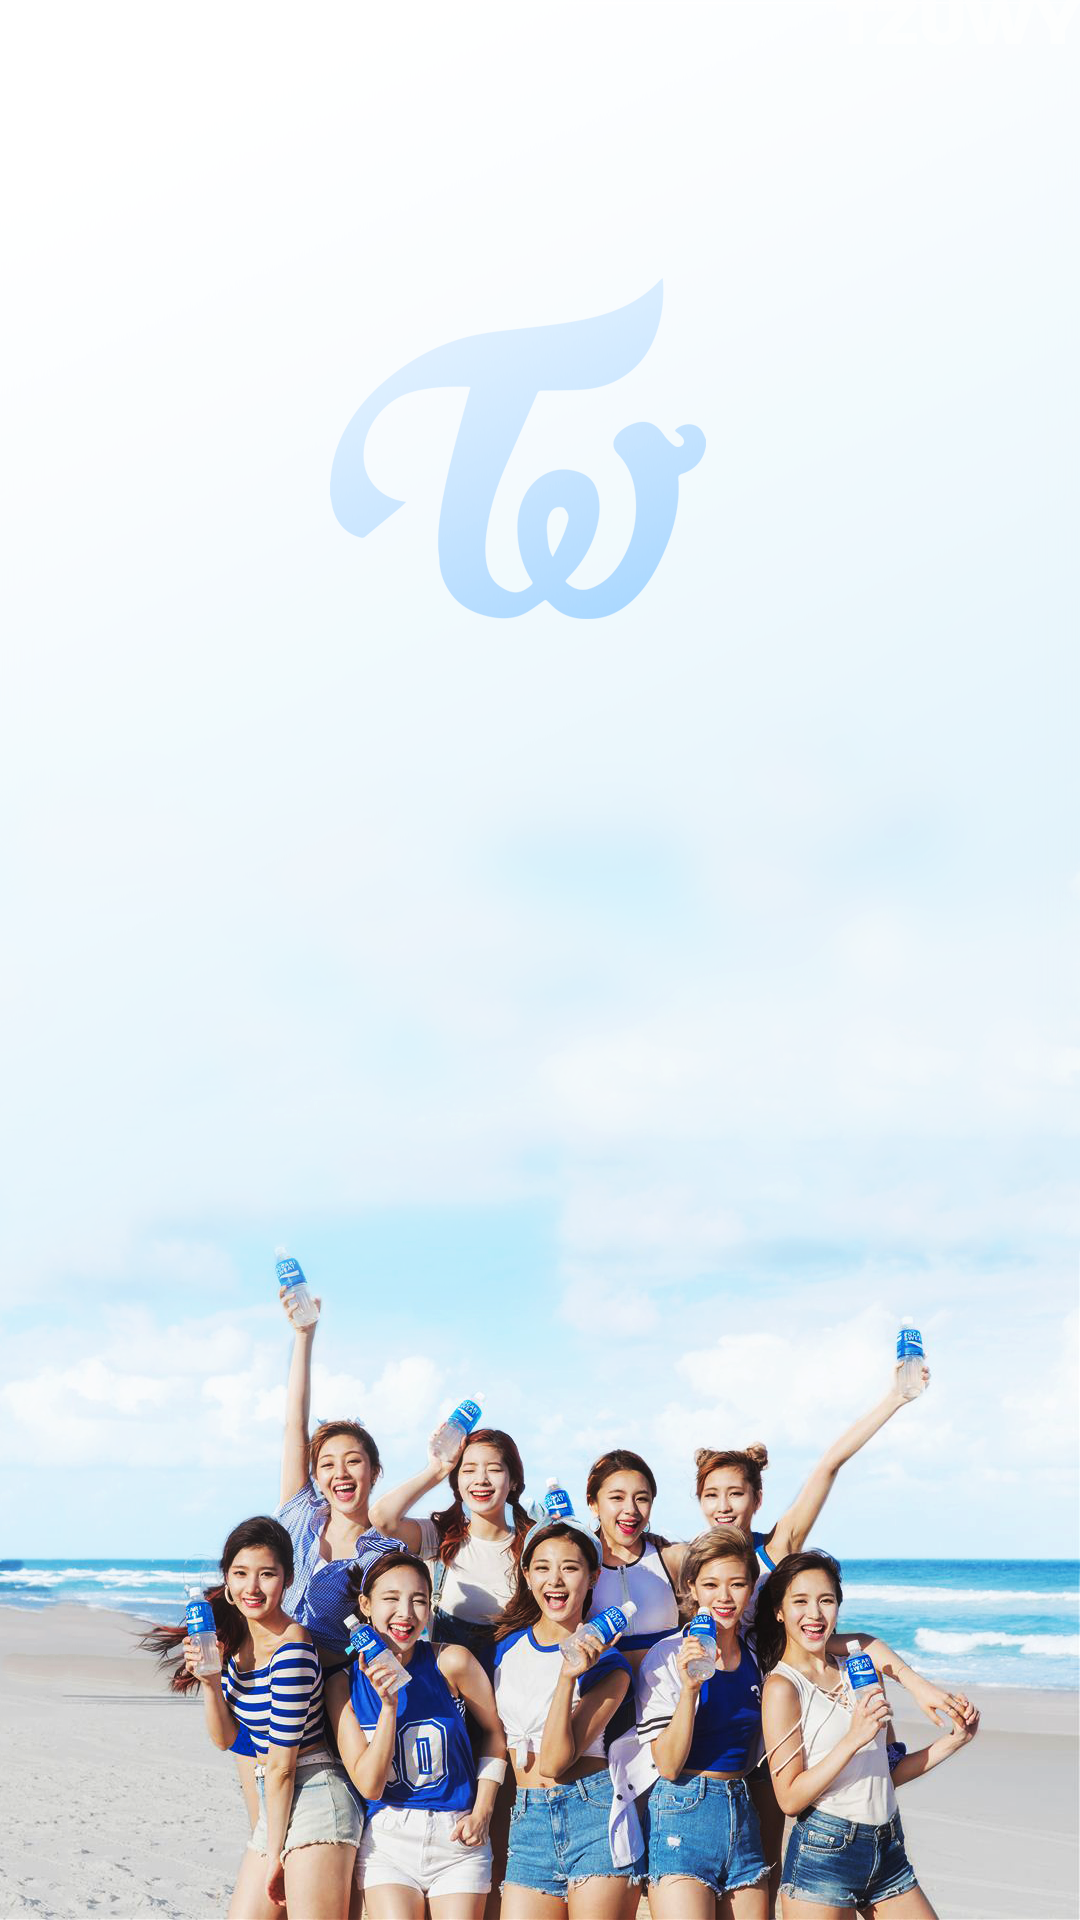 twice iphone wallpaper,people,blue,fun,water,vacation